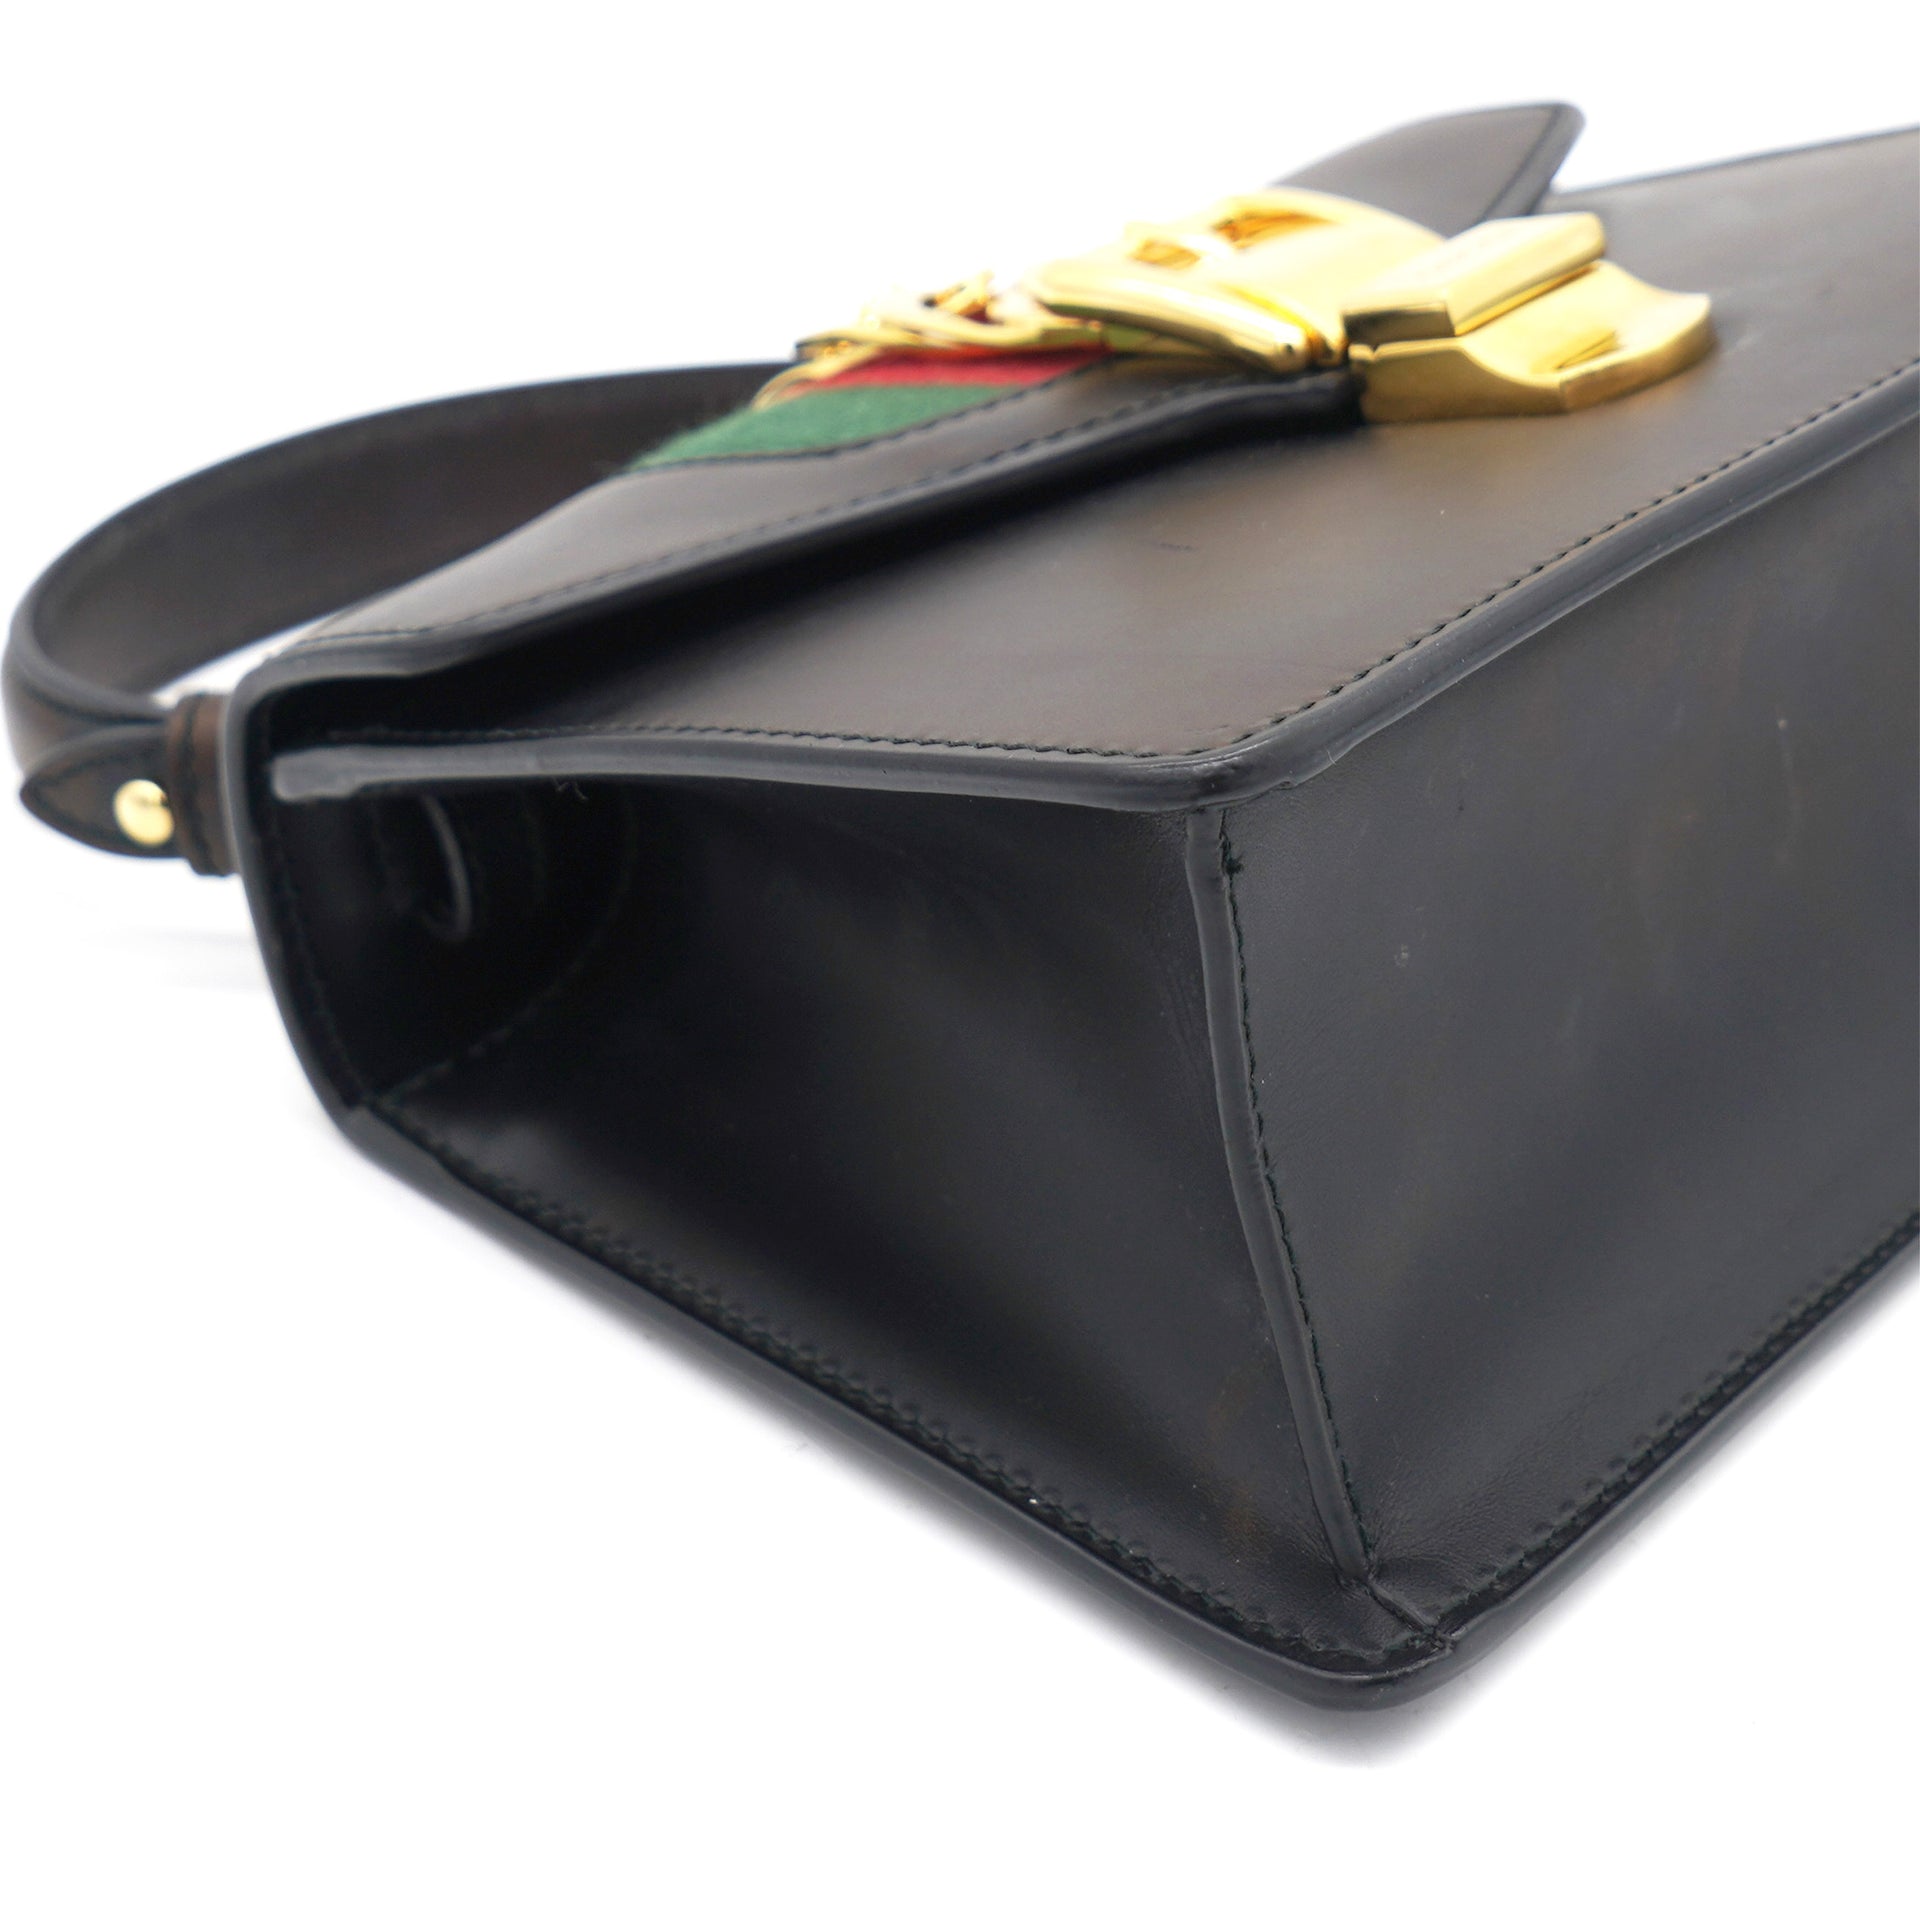 Calfskin Leather Mini Web Chain Sylvie Top Handle bag